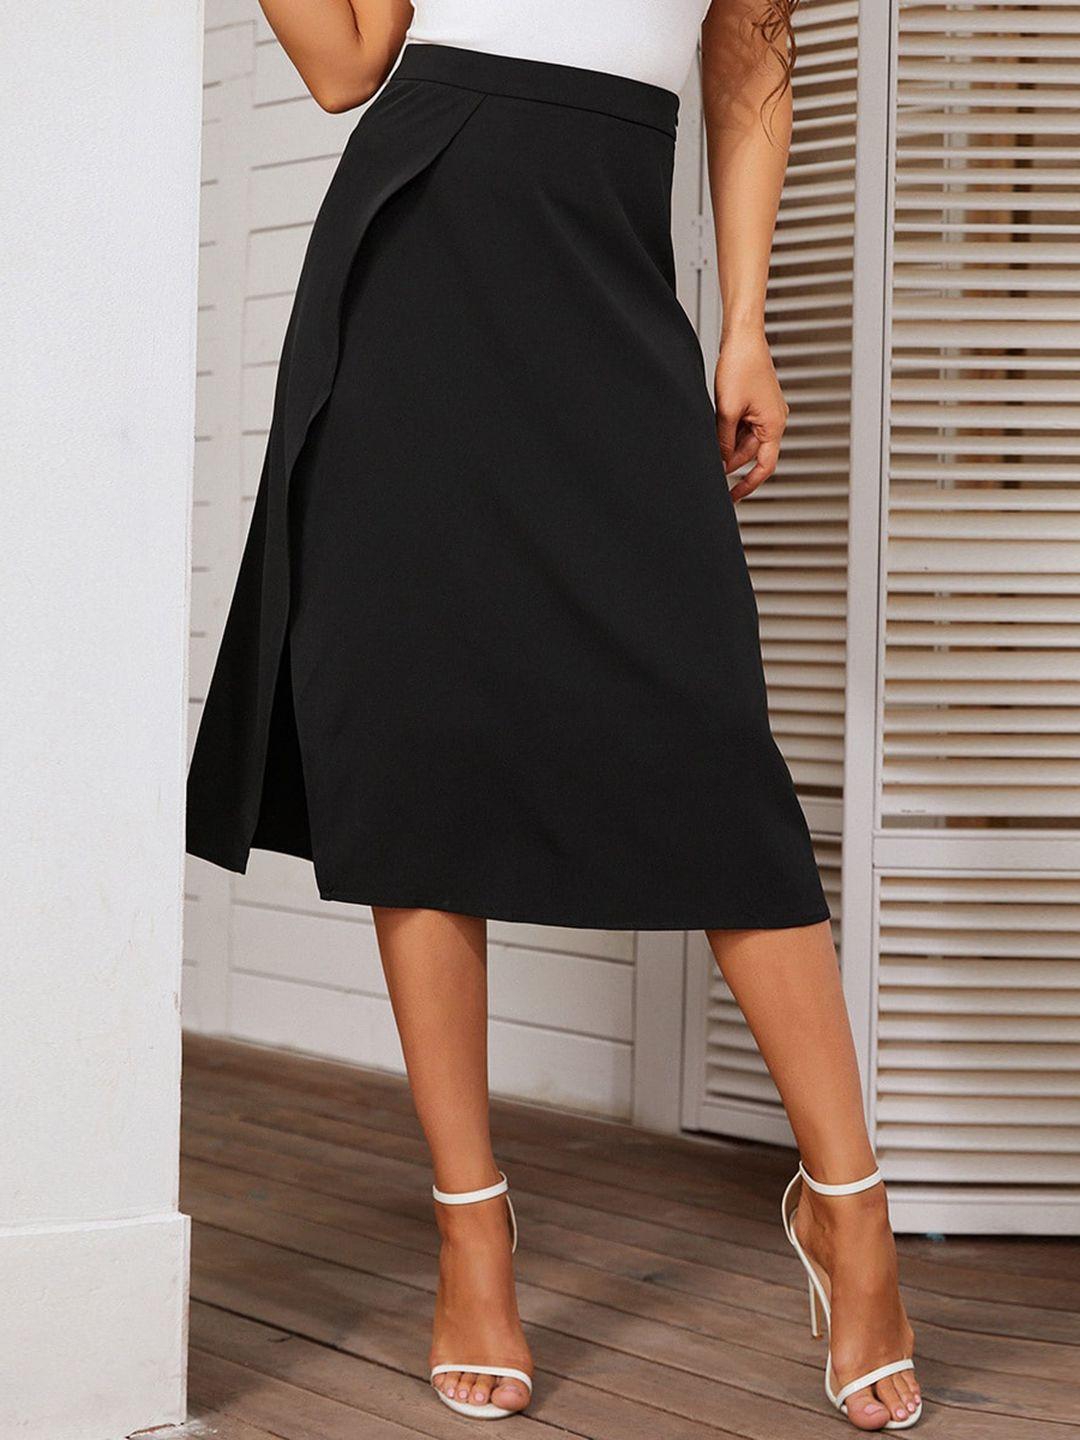 stylecast women black solid knee length flared skirts